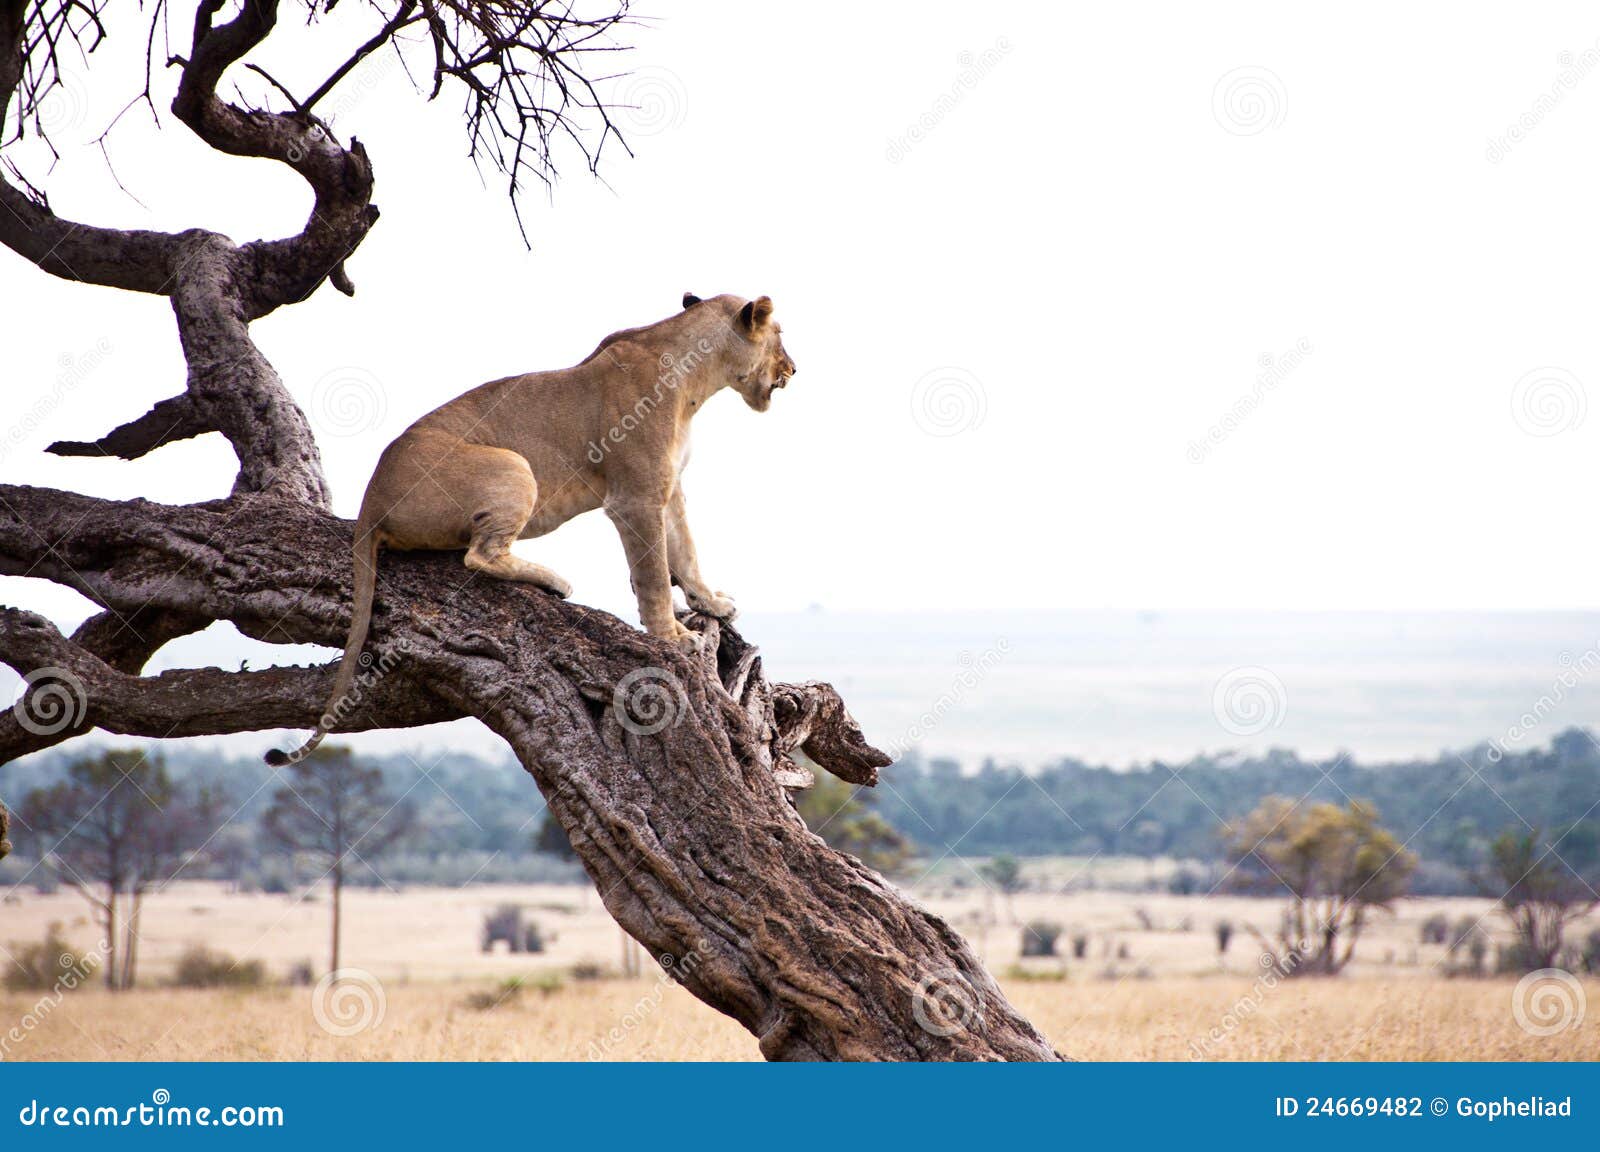 lioness in the masai mara